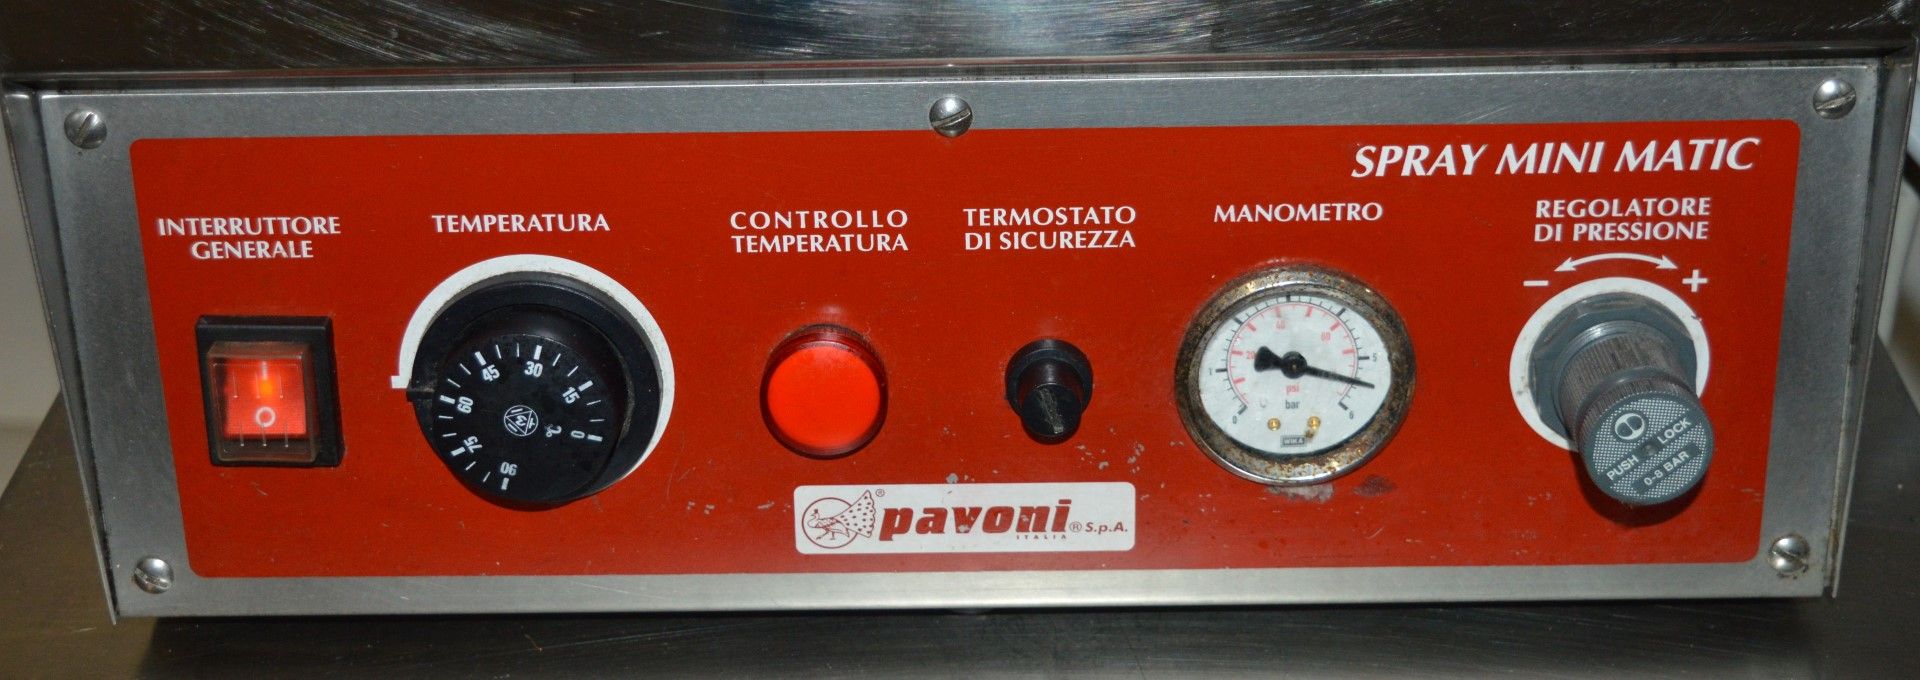 1 x Pavoni Single Gun Countertop Glazer - Stainless Steel - Bakery Equipment - CL295 - Ref J1194 - - Image 2 of 10